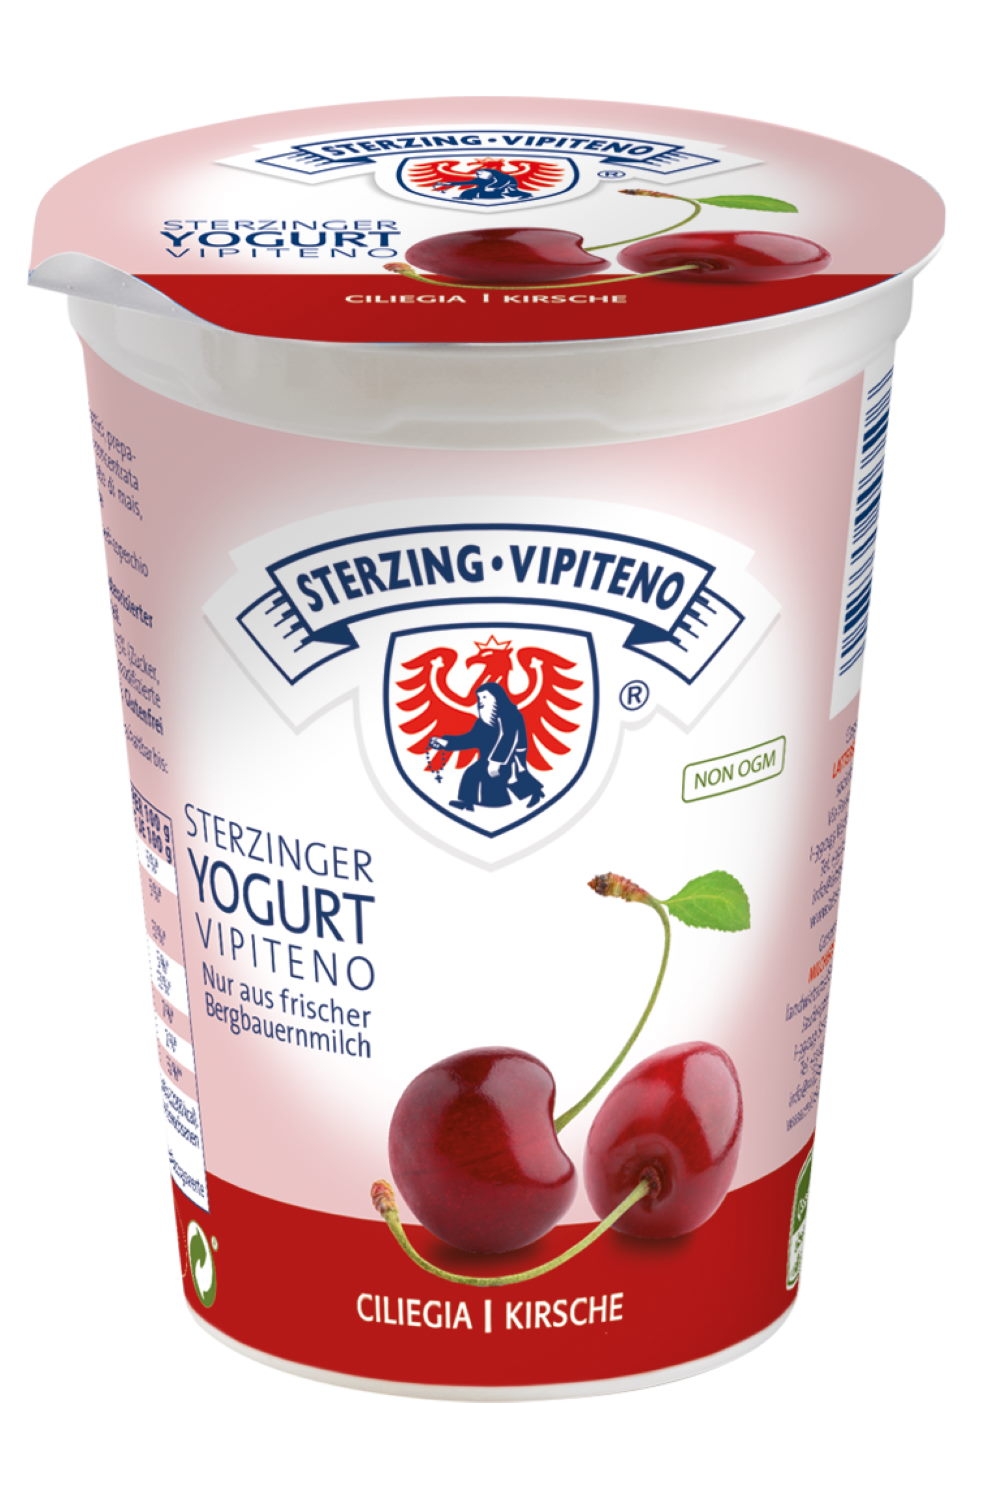 Yogurt Ciliegia (6 x 500g) Latteria Vipiteno